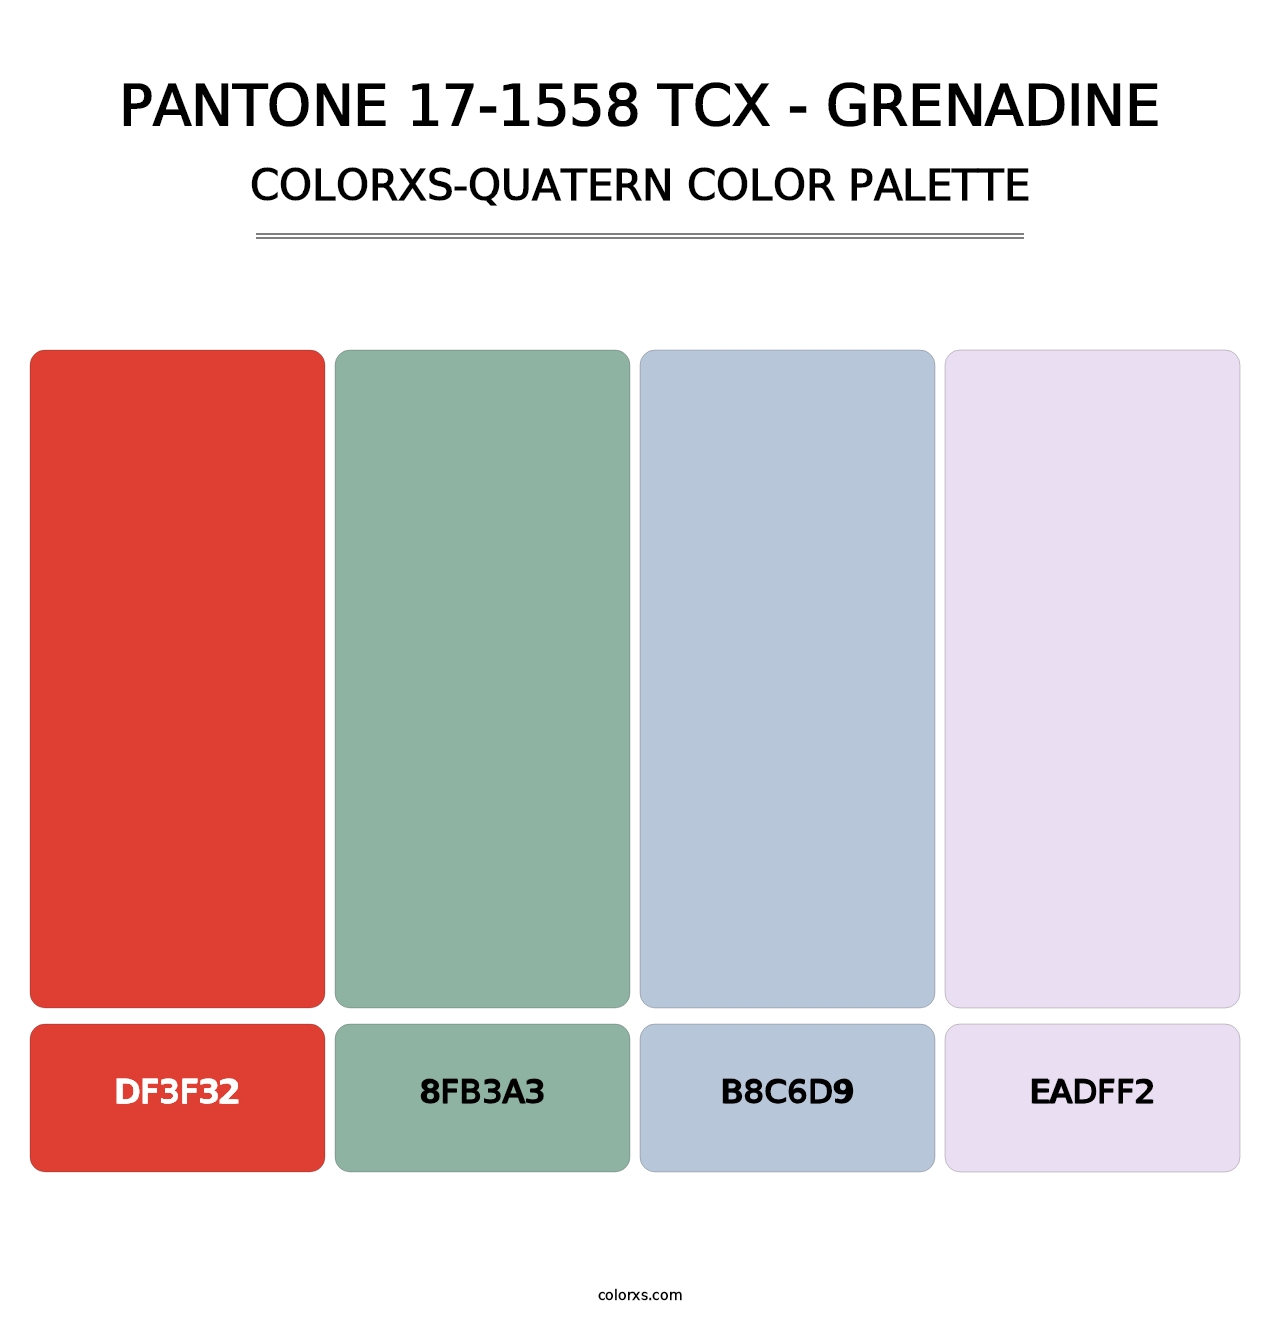 PANTONE 17-1558 TCX - Grenadine - Colorxs Quatern Palette